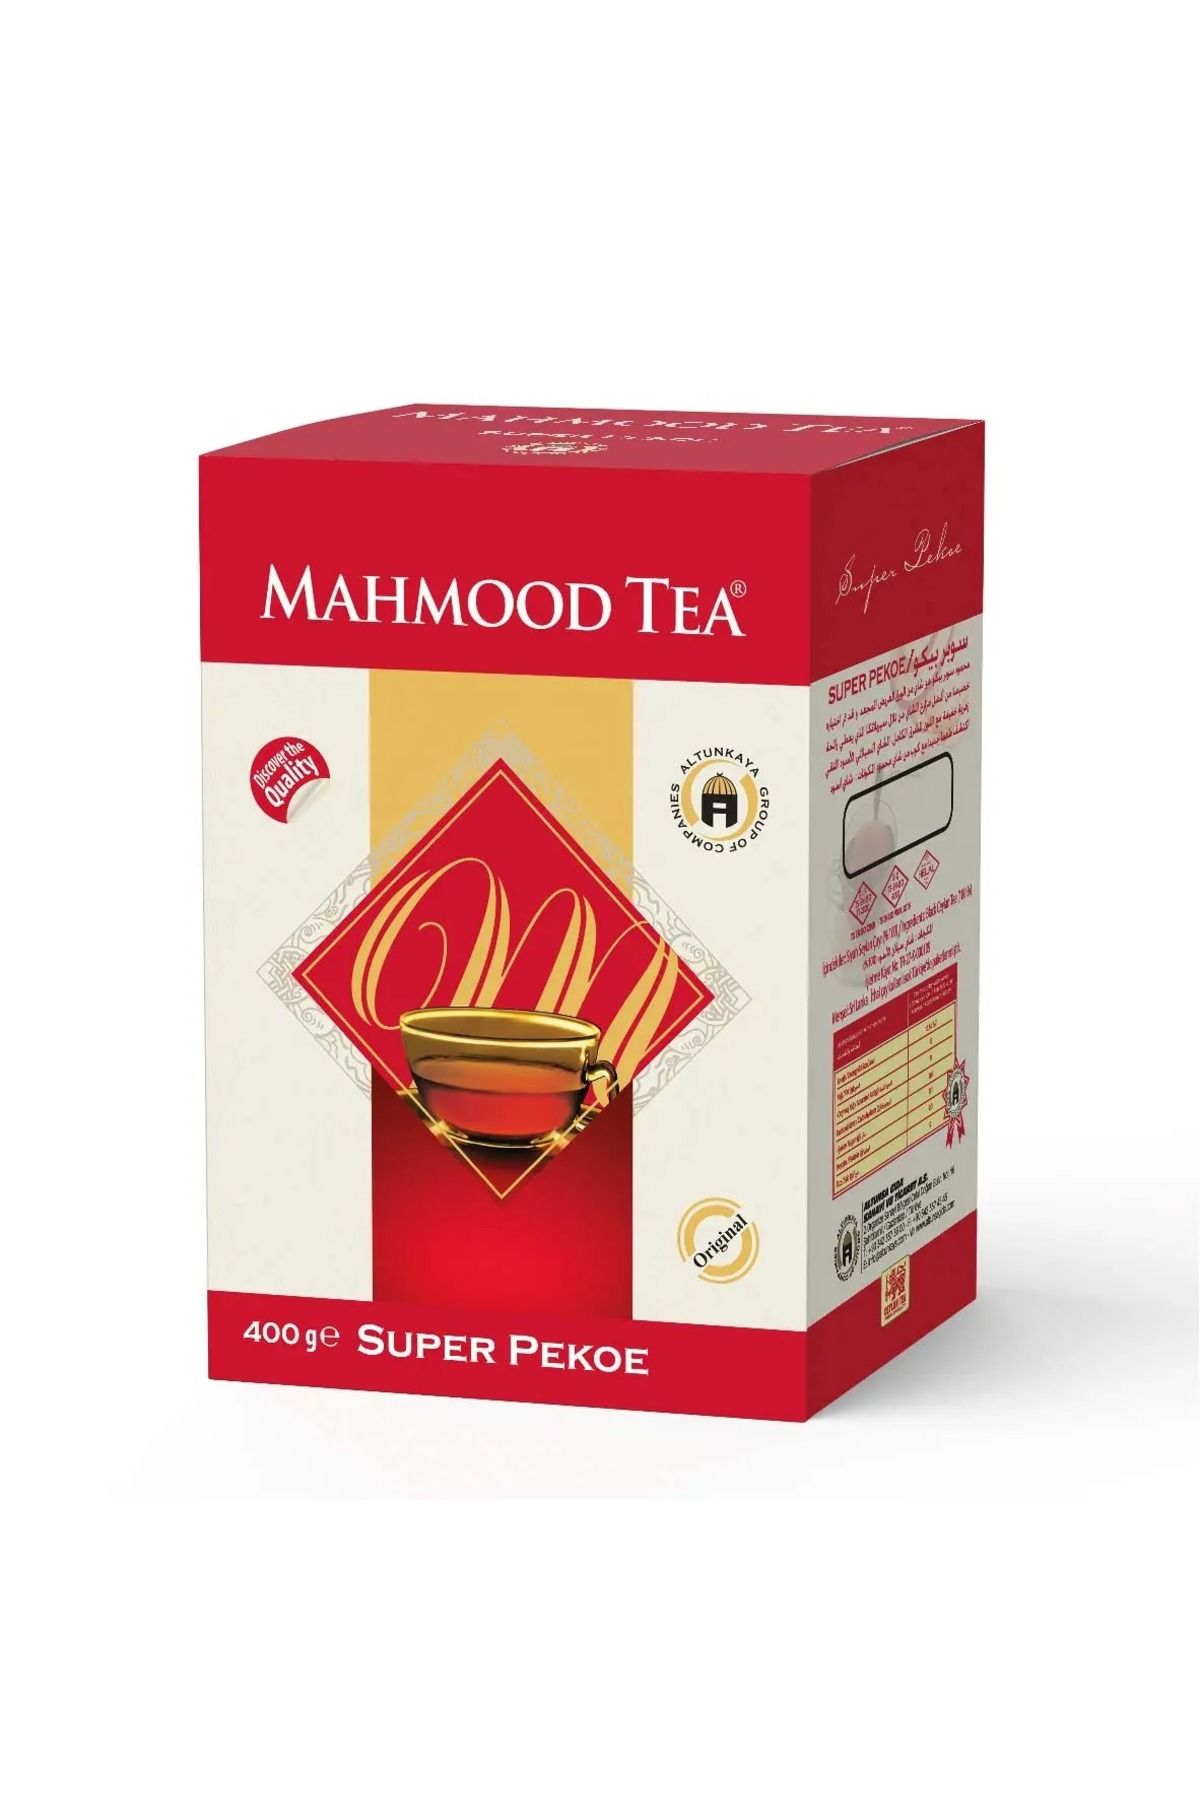 Mahmood Tea Super Pekoe Ithal Seylan Sri Lanka Ceylon Dökme Çayı 400 gr